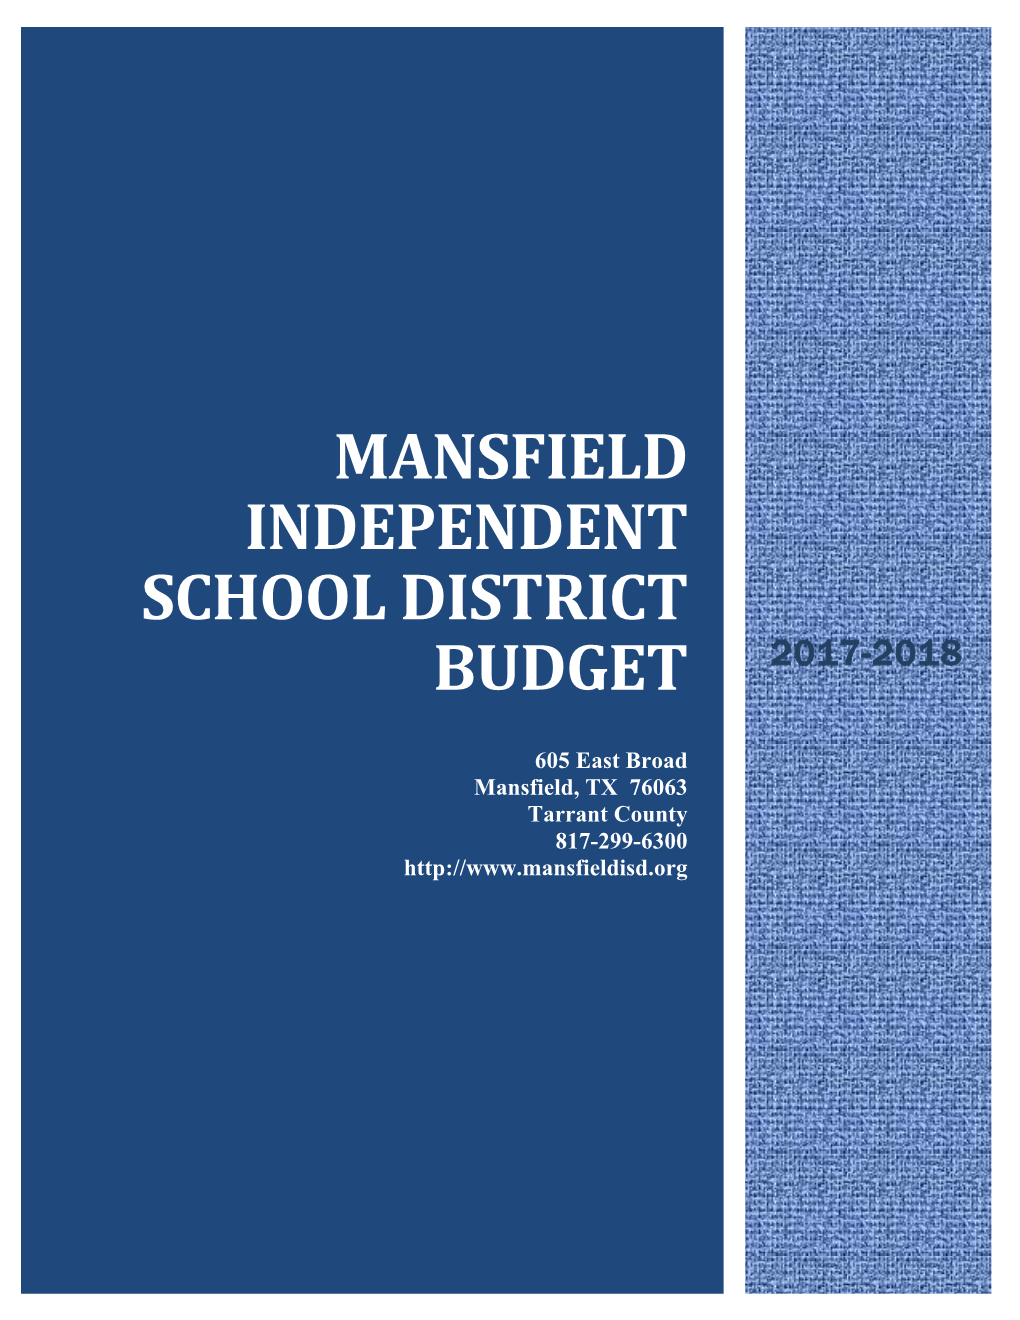 Mansfield Independent School District Budget 2017-2018